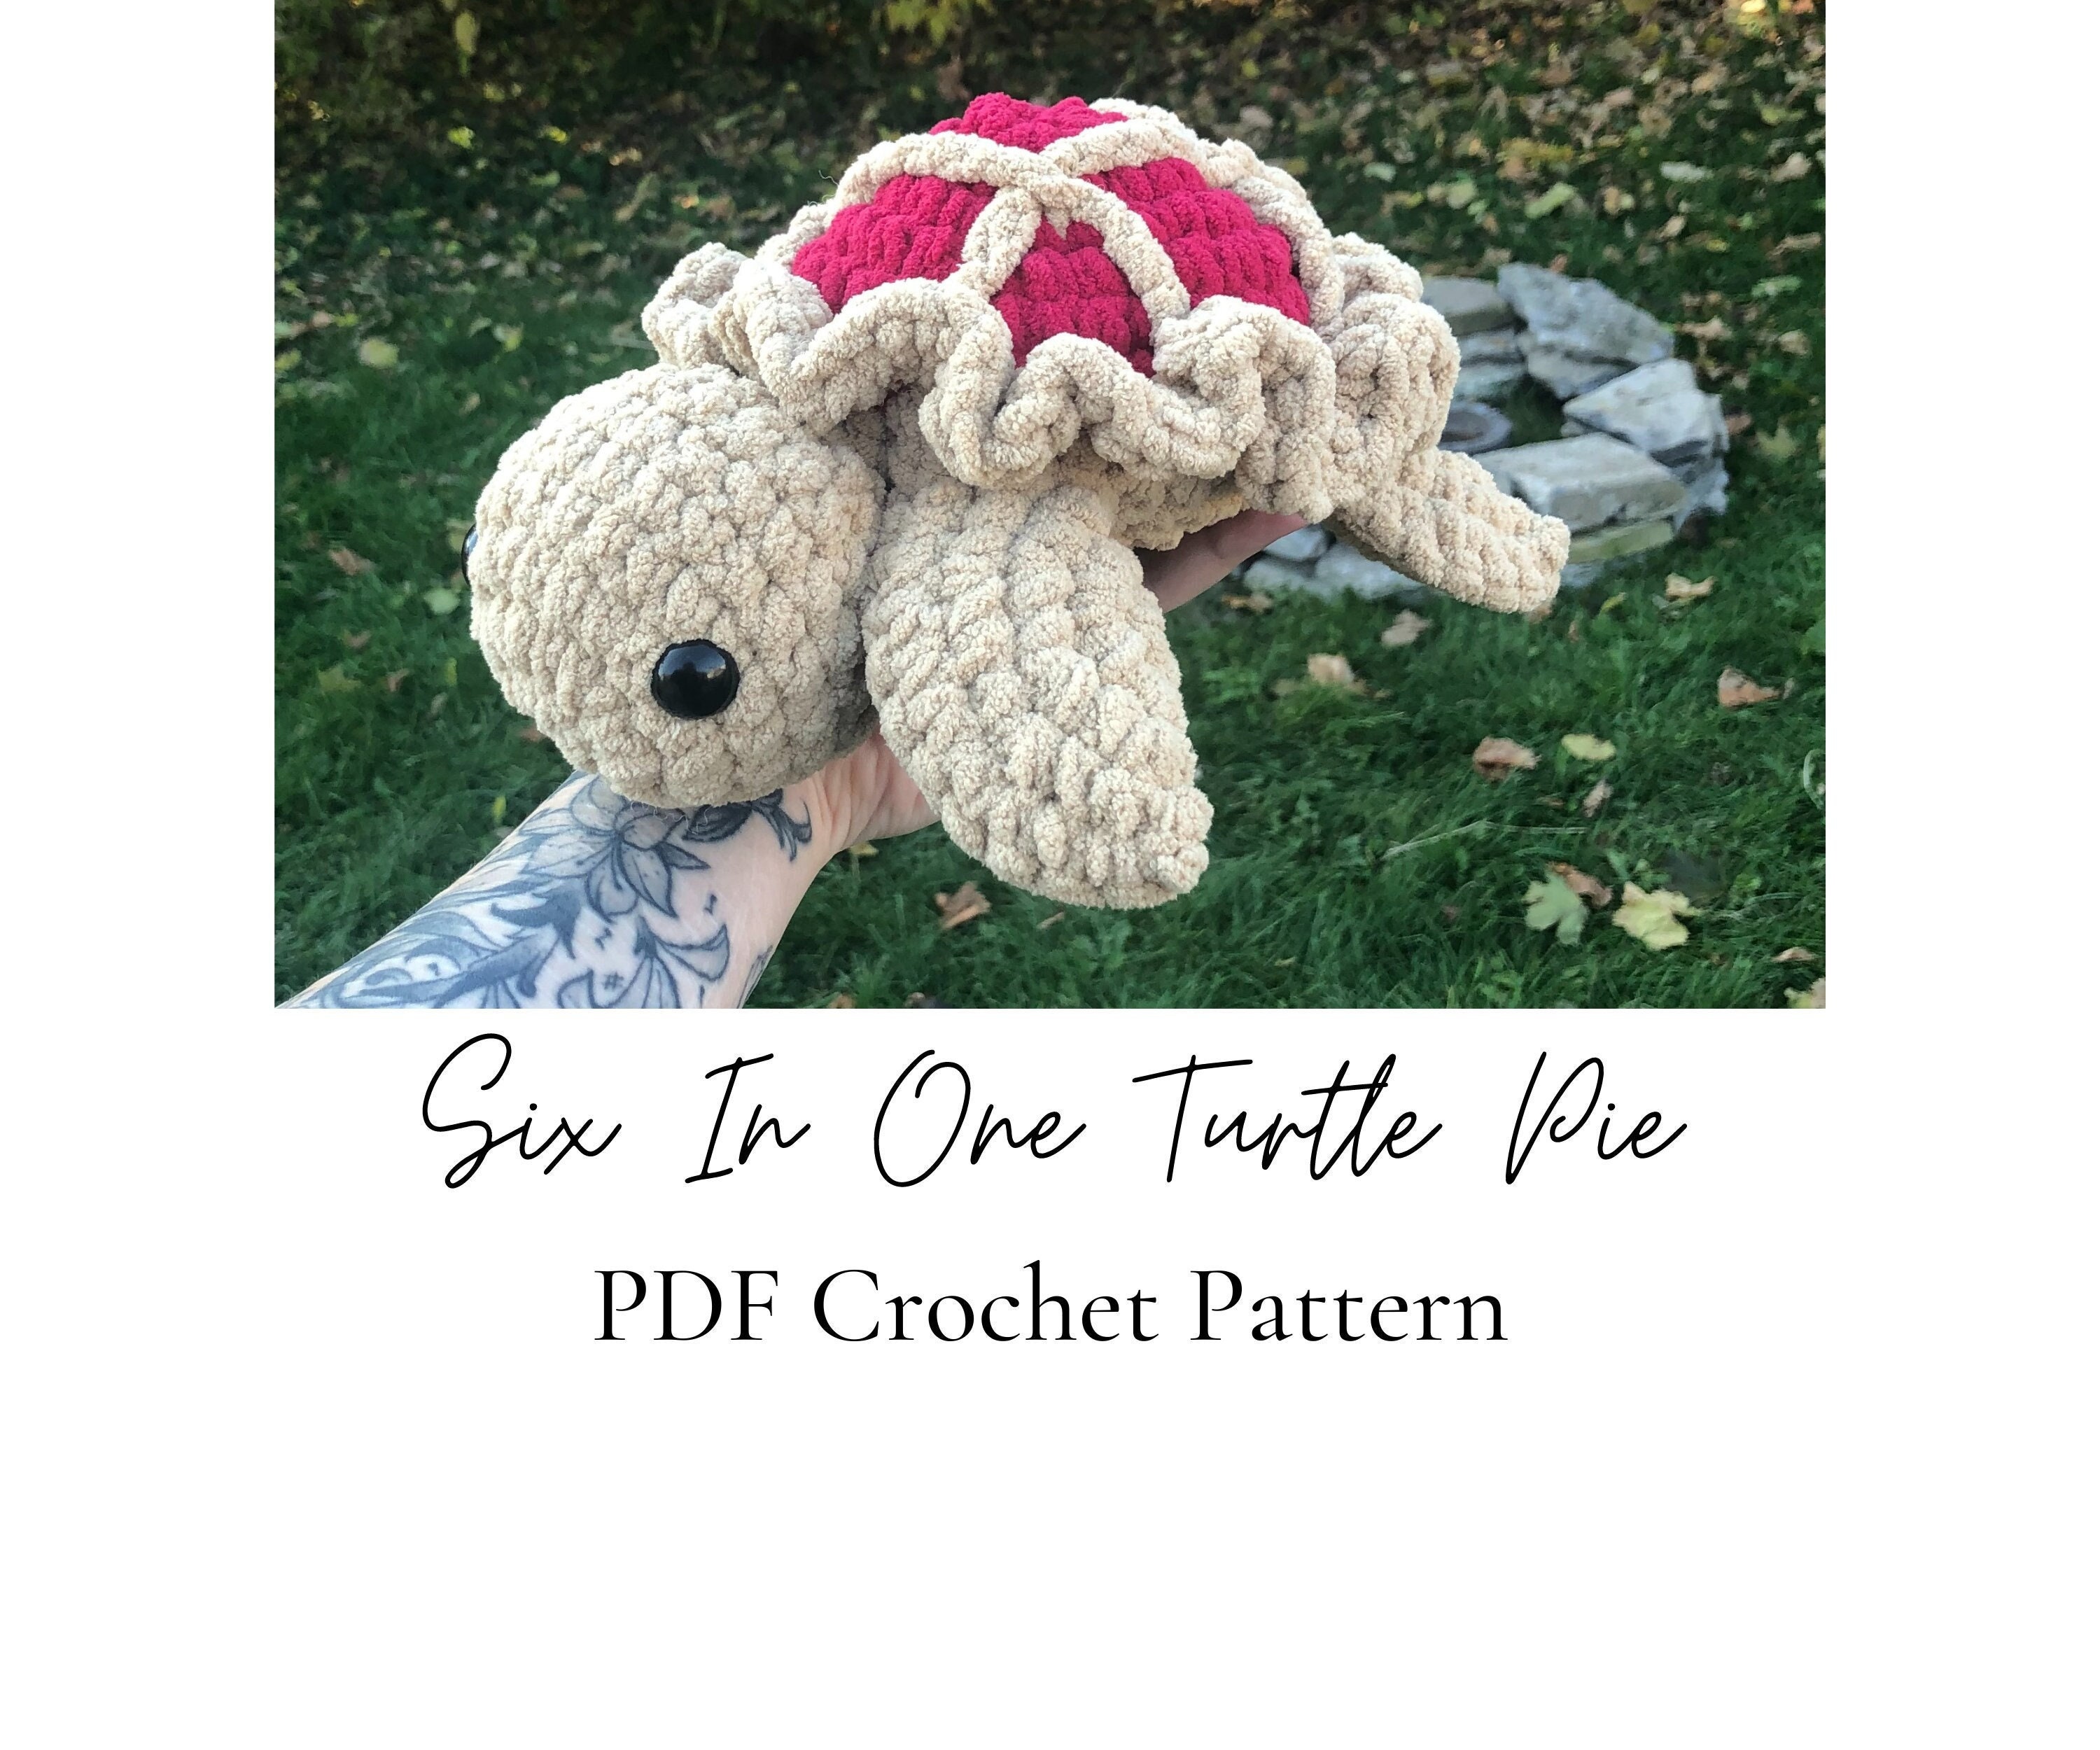 PRE-ORDER Premier PARFAIT Chunky Yarn, Crochet Bulky Yarn, Crochet